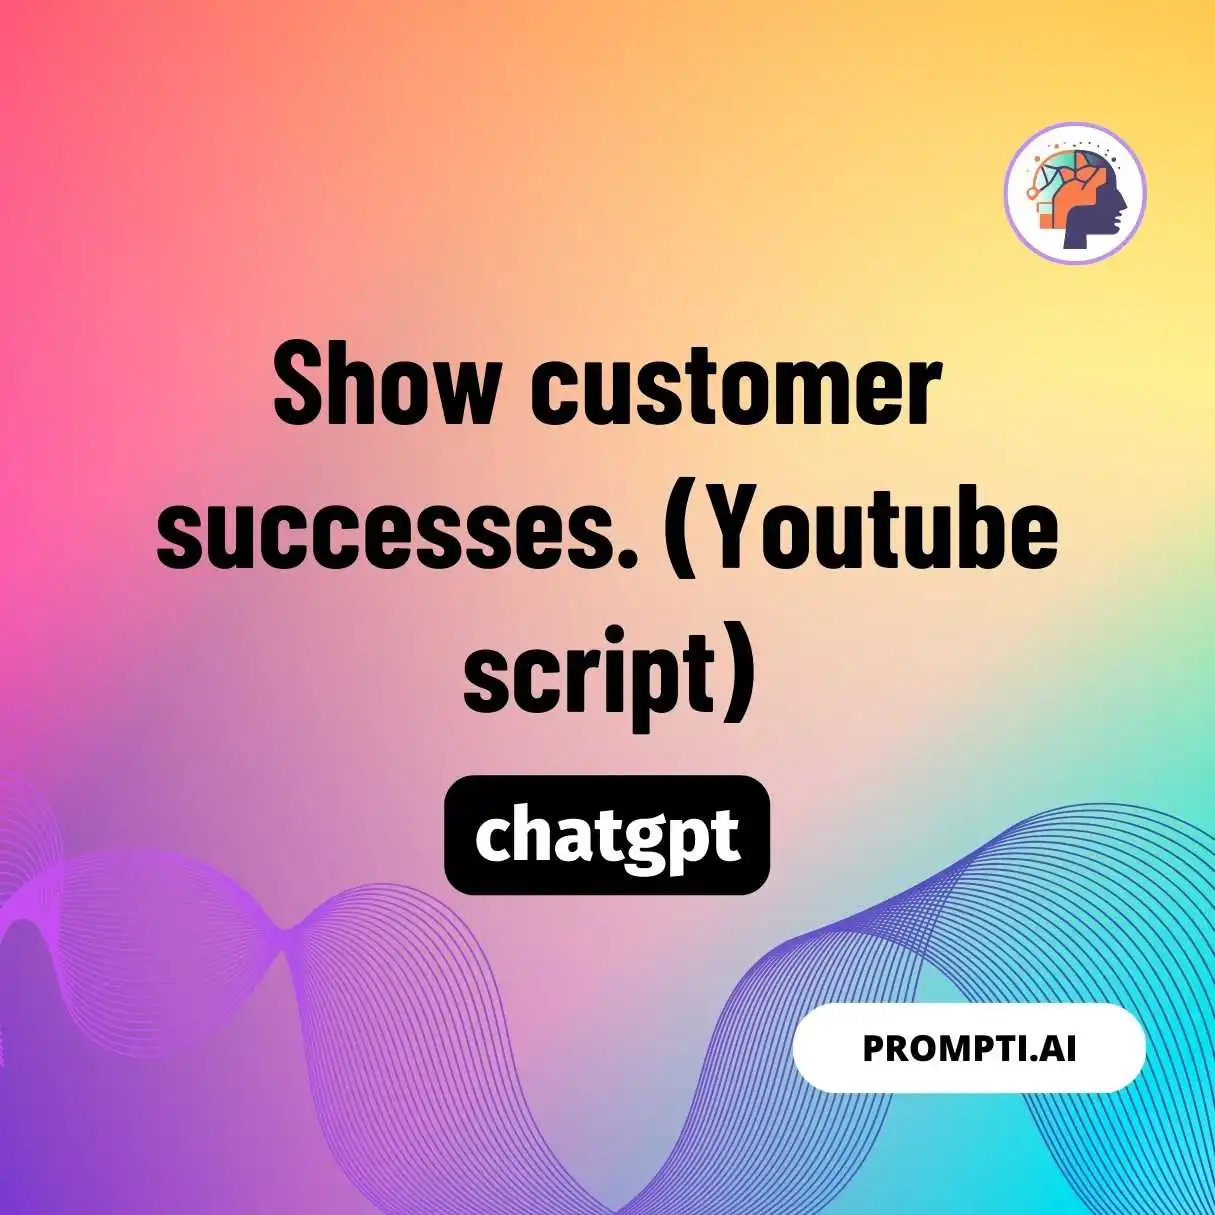 Show customer successes. (Youtube script)